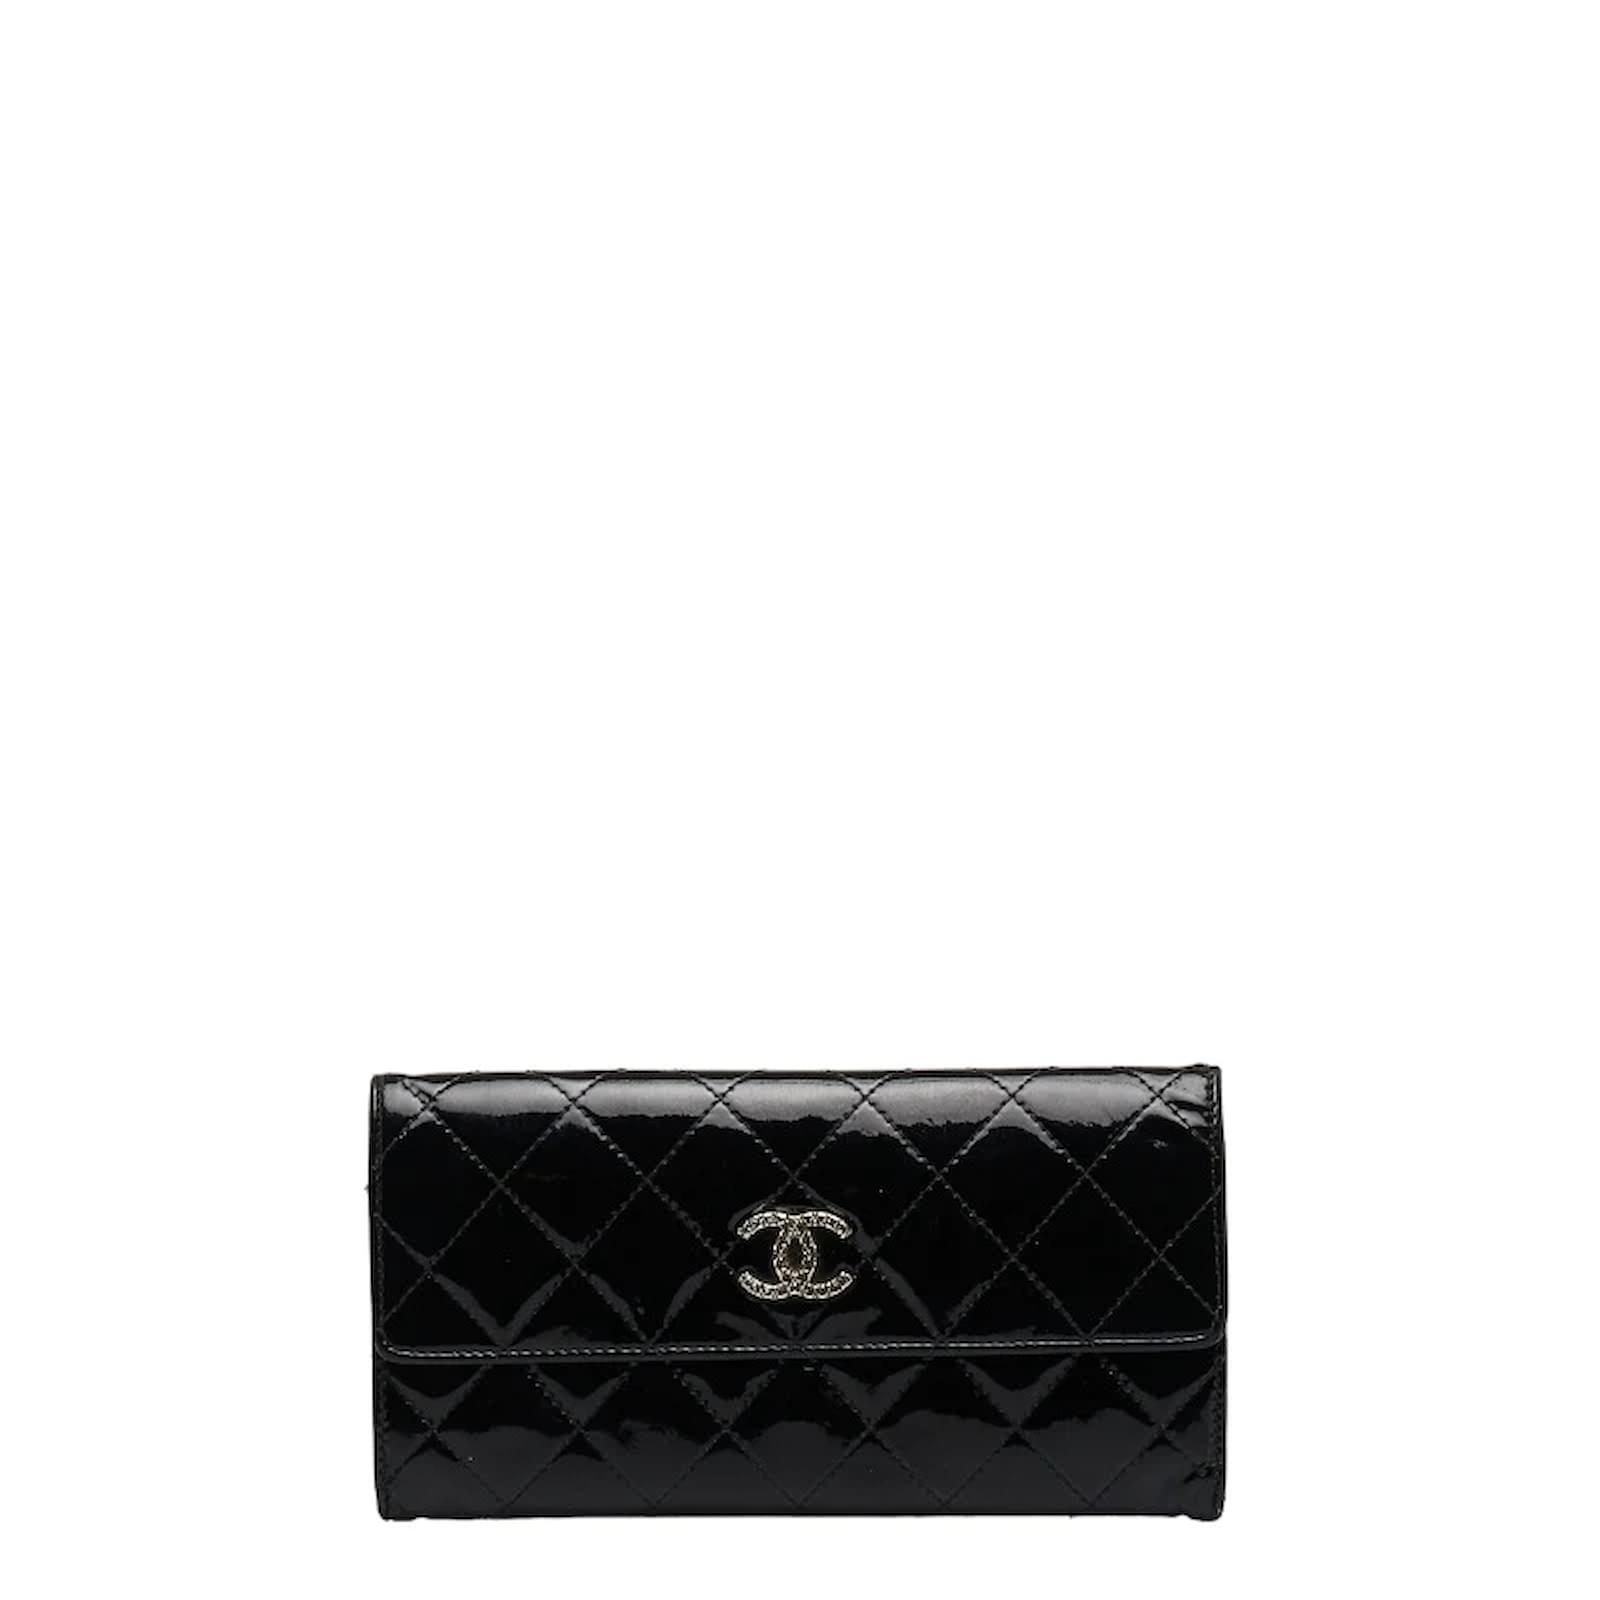 Chanel CC Metallic Flap Wallet